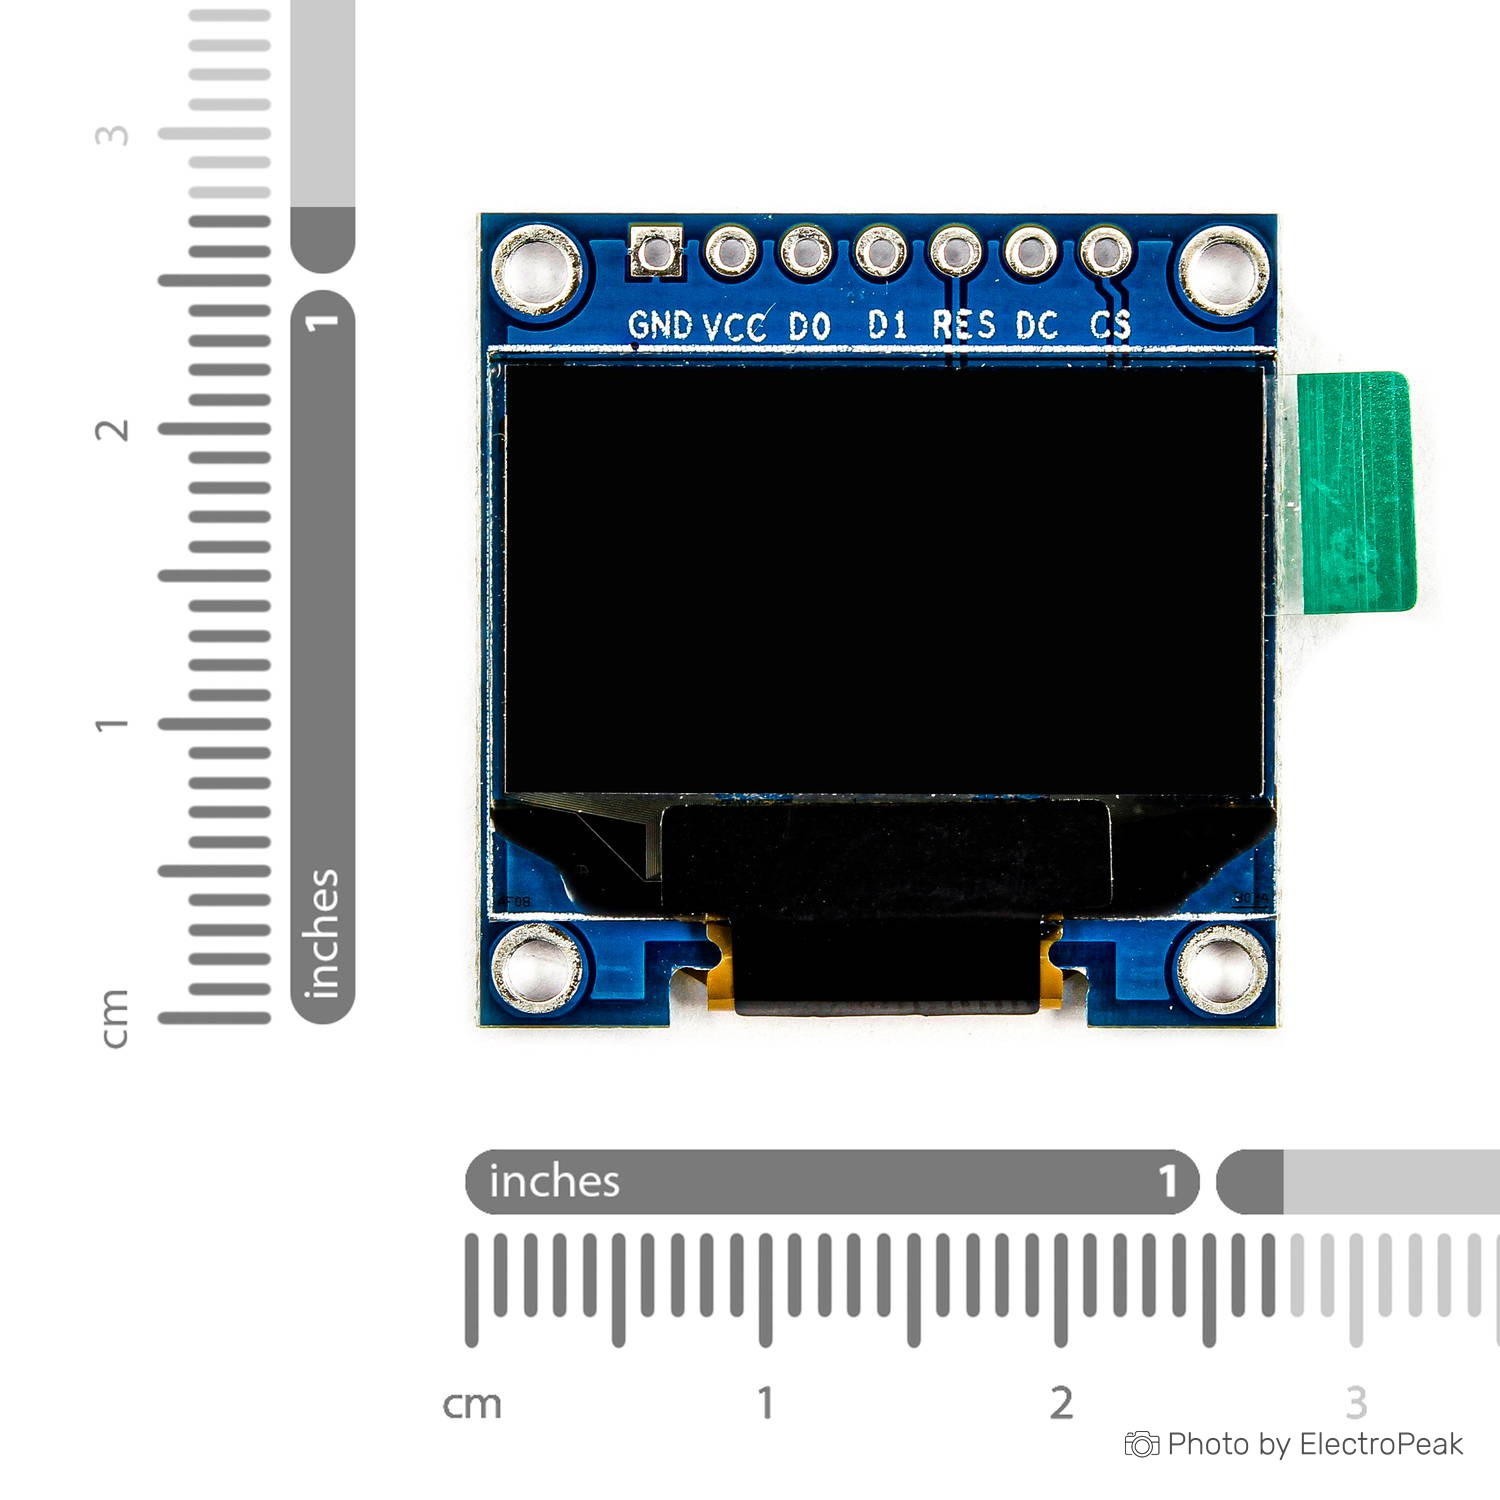 Interfacing 0.96 Inch SPI OLED Display Module with Arduino - Electropeak